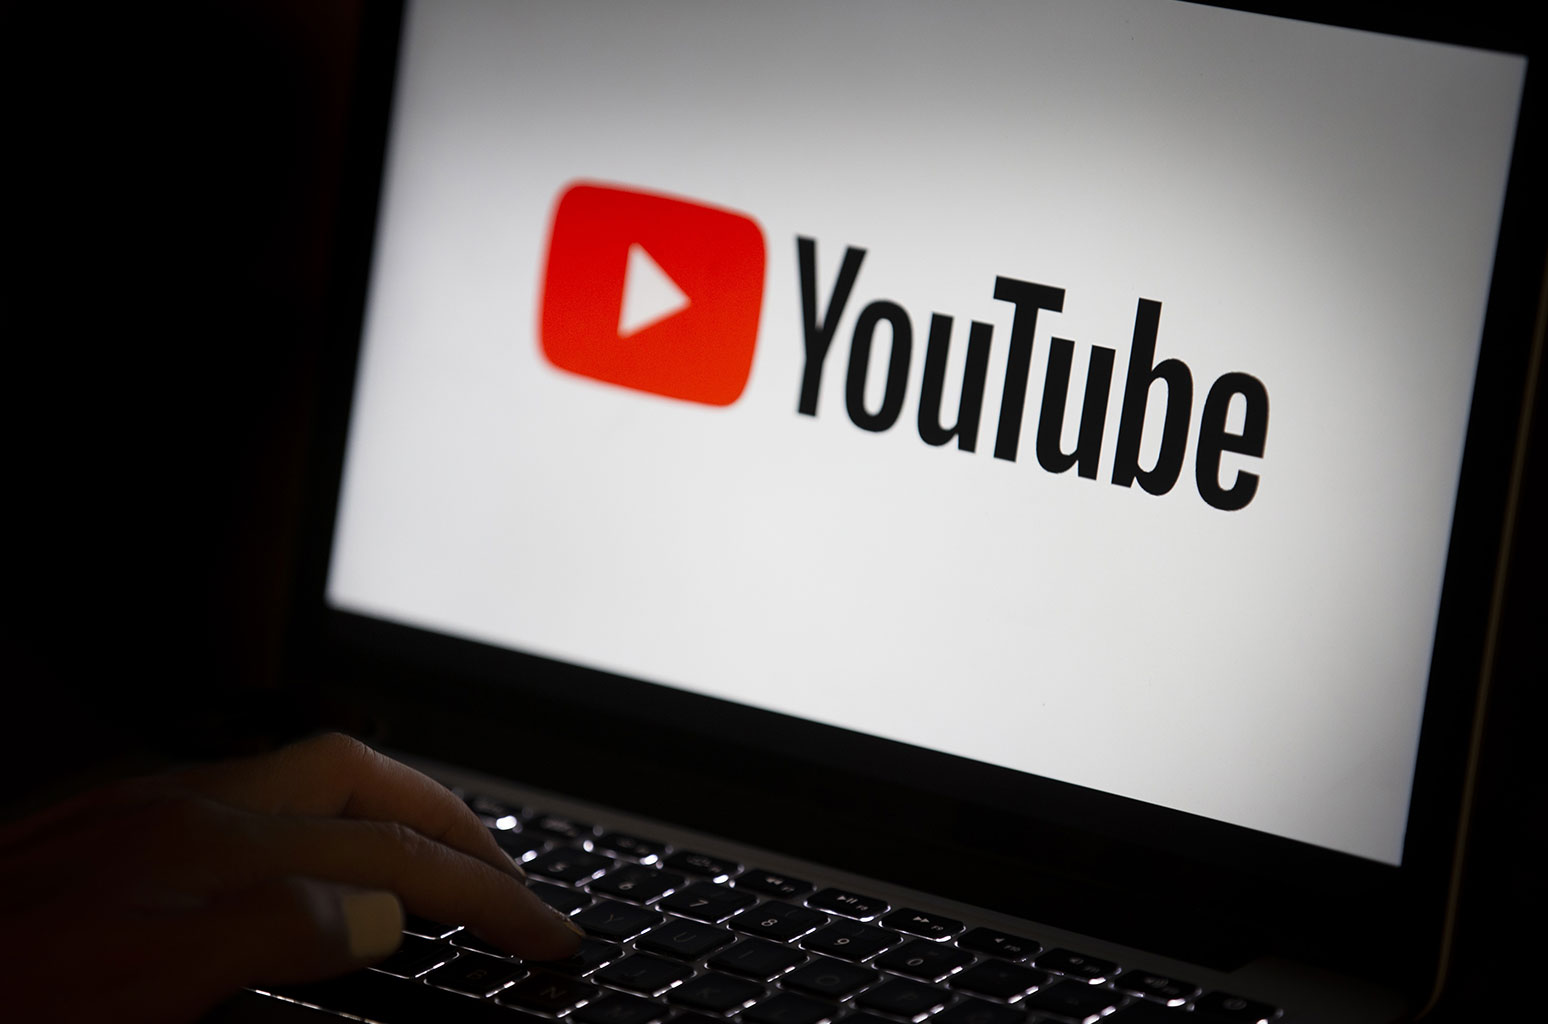 YouTube Cracks Down on Racist, Sexist Insults in Videos - www.billboard.com